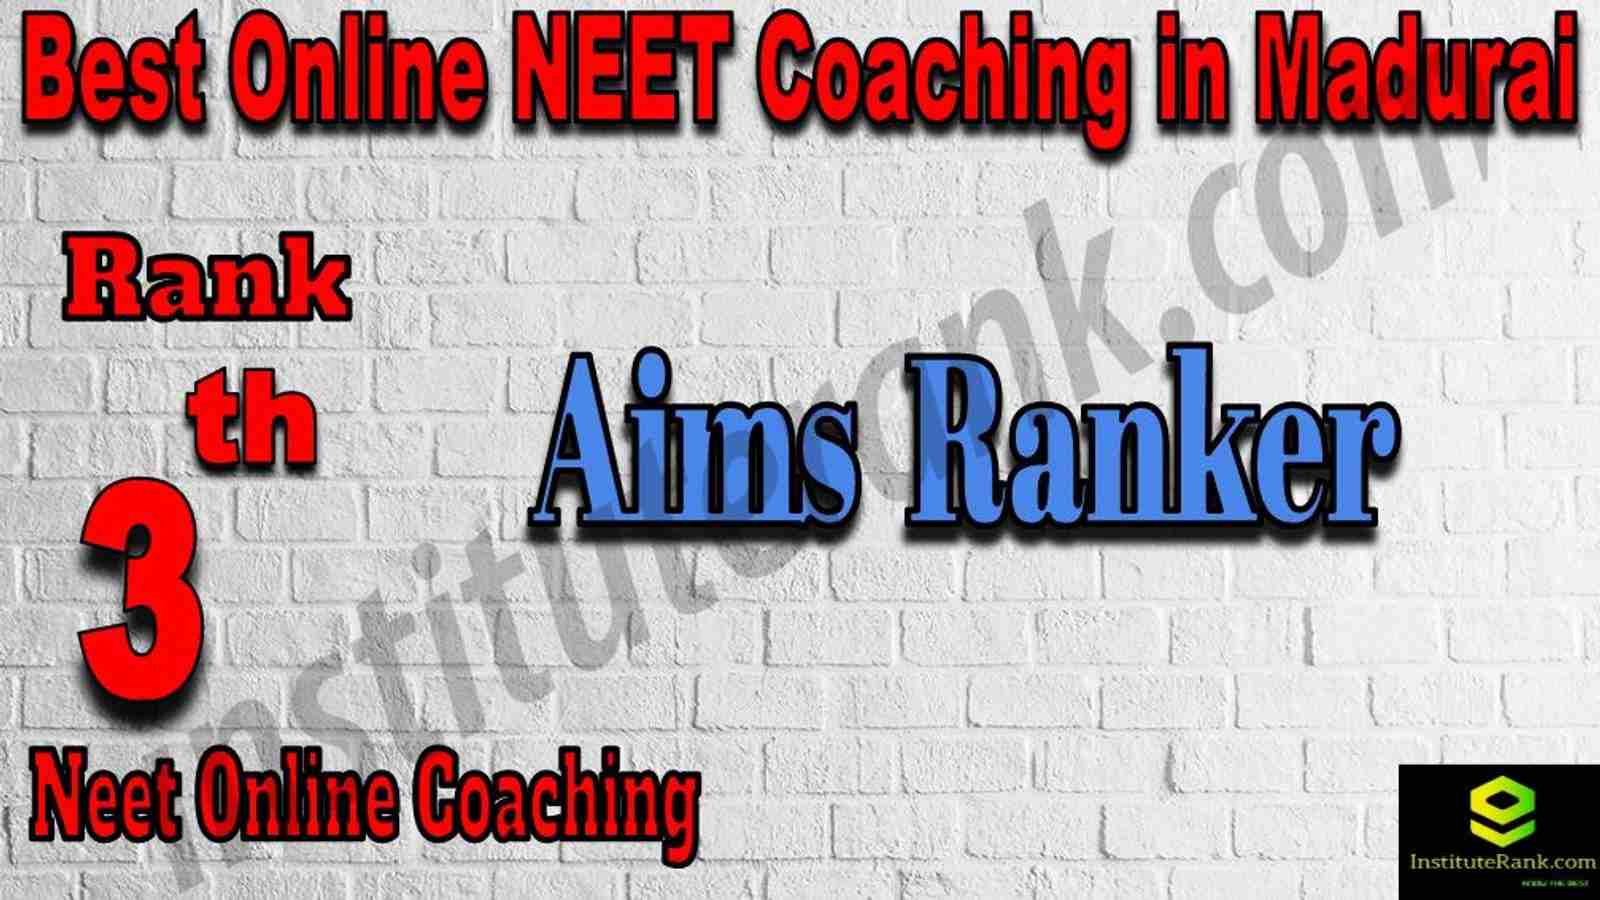 3rd Best Online Neet Coaching in Madurai